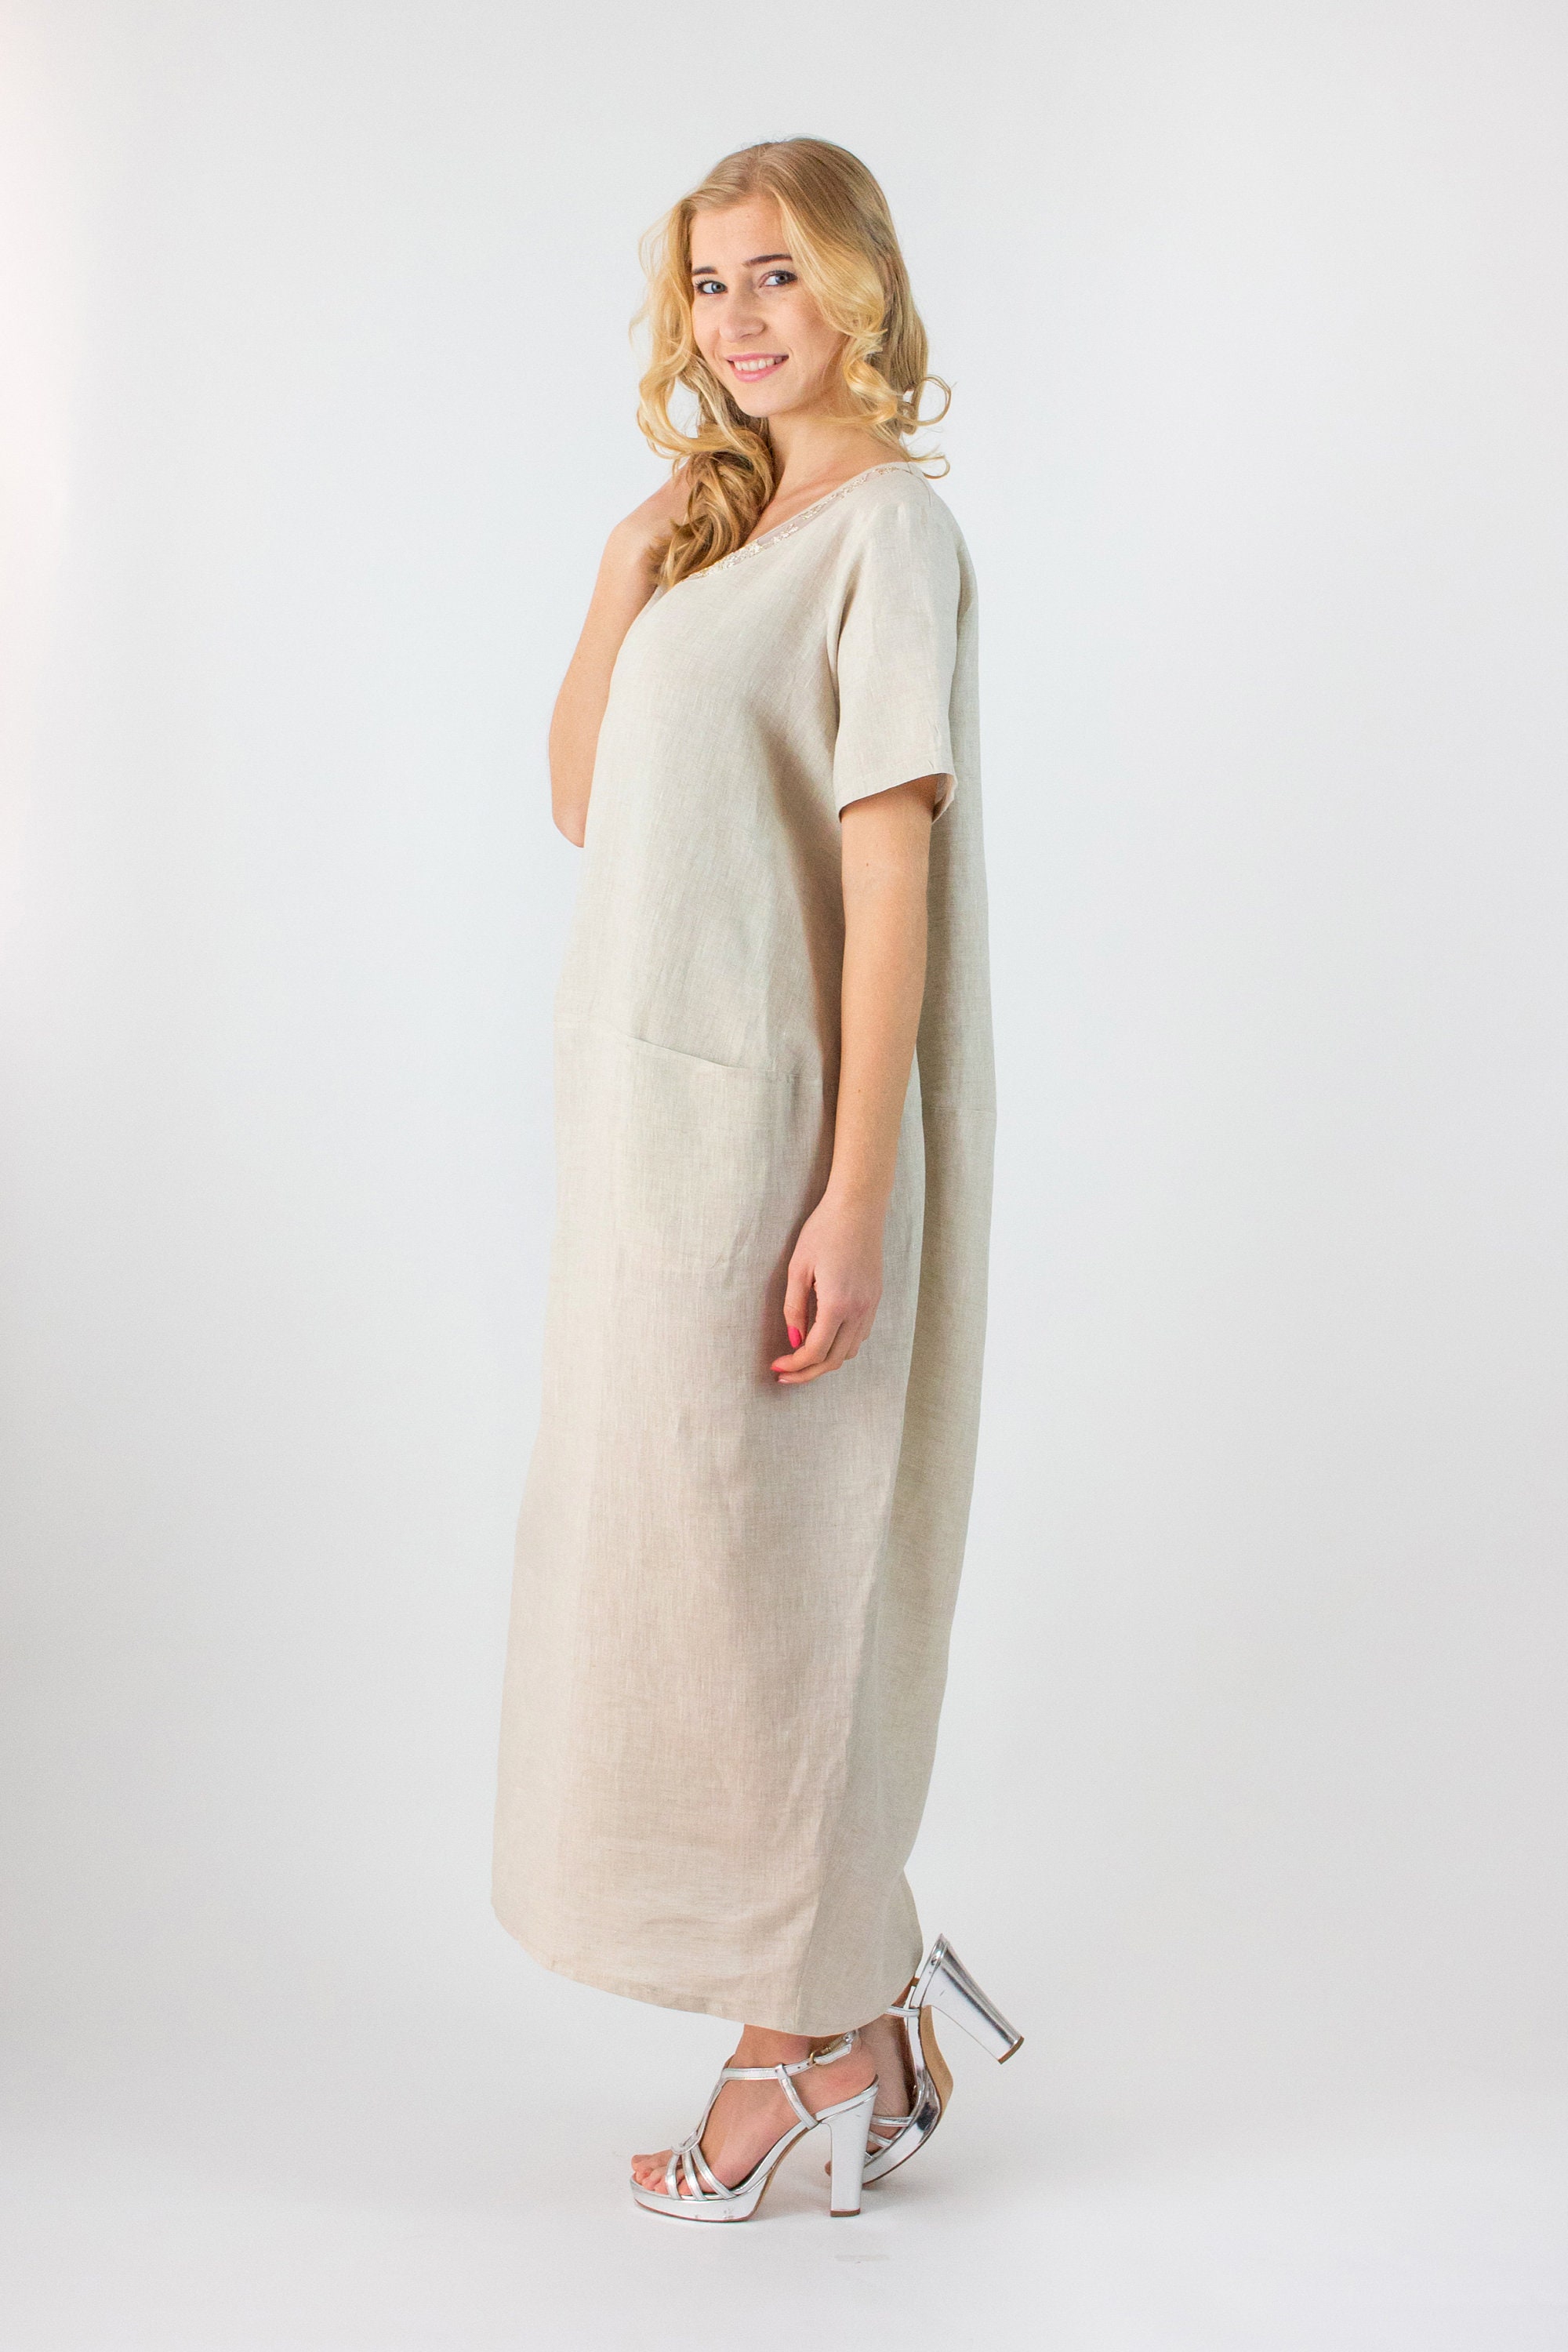 Italian Linen Maxi Dress Plus Size Kaftan Dress Maternity | Etsy